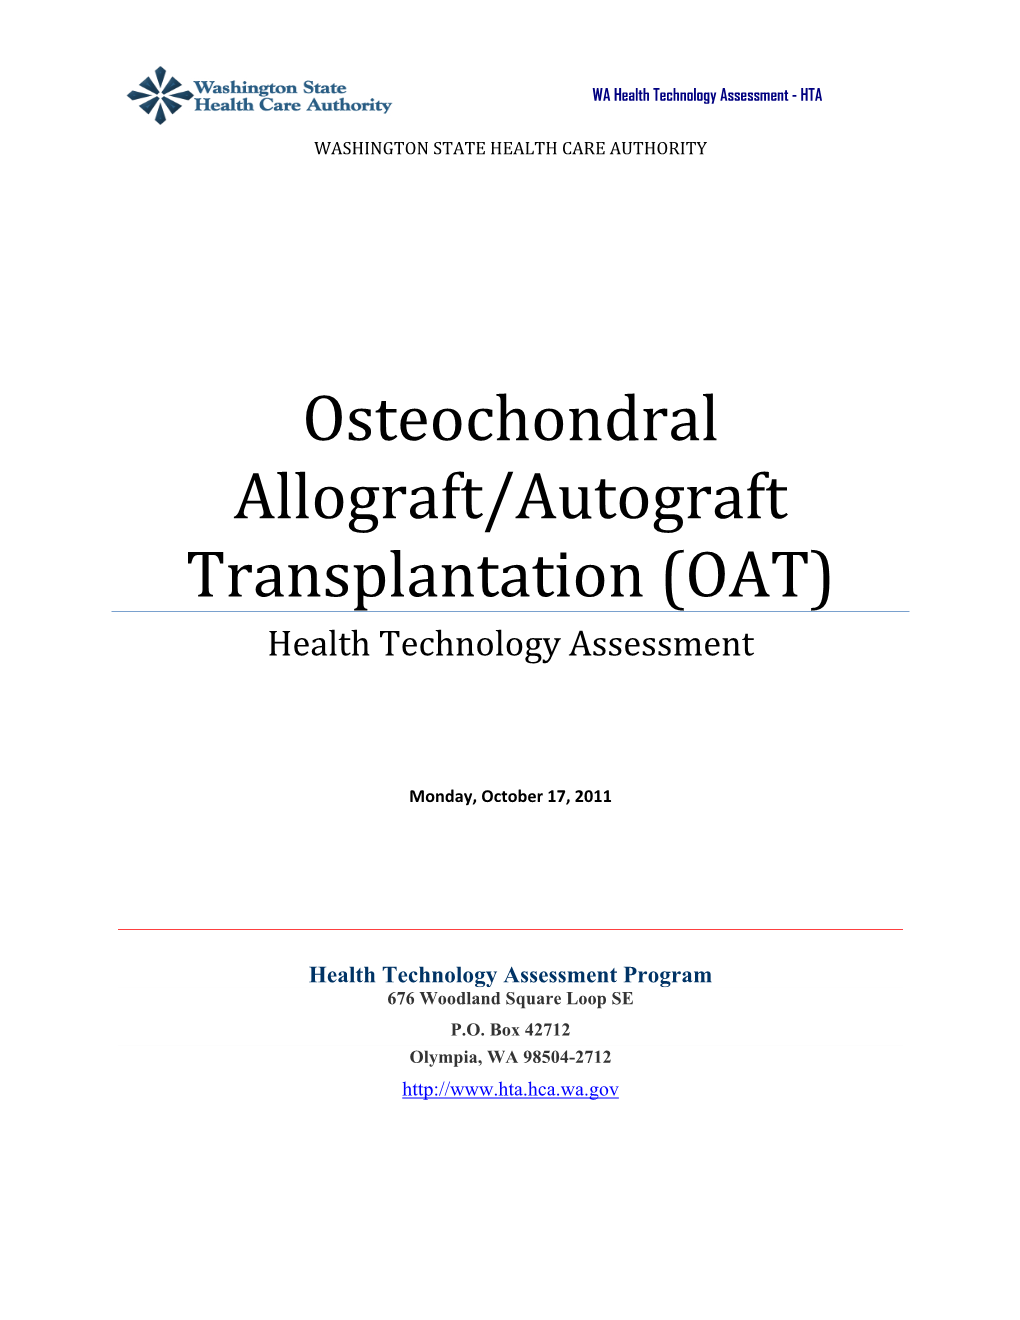 Osteochondral Allograft/Autograft Transplantation (OAT) Health Technology Assessment